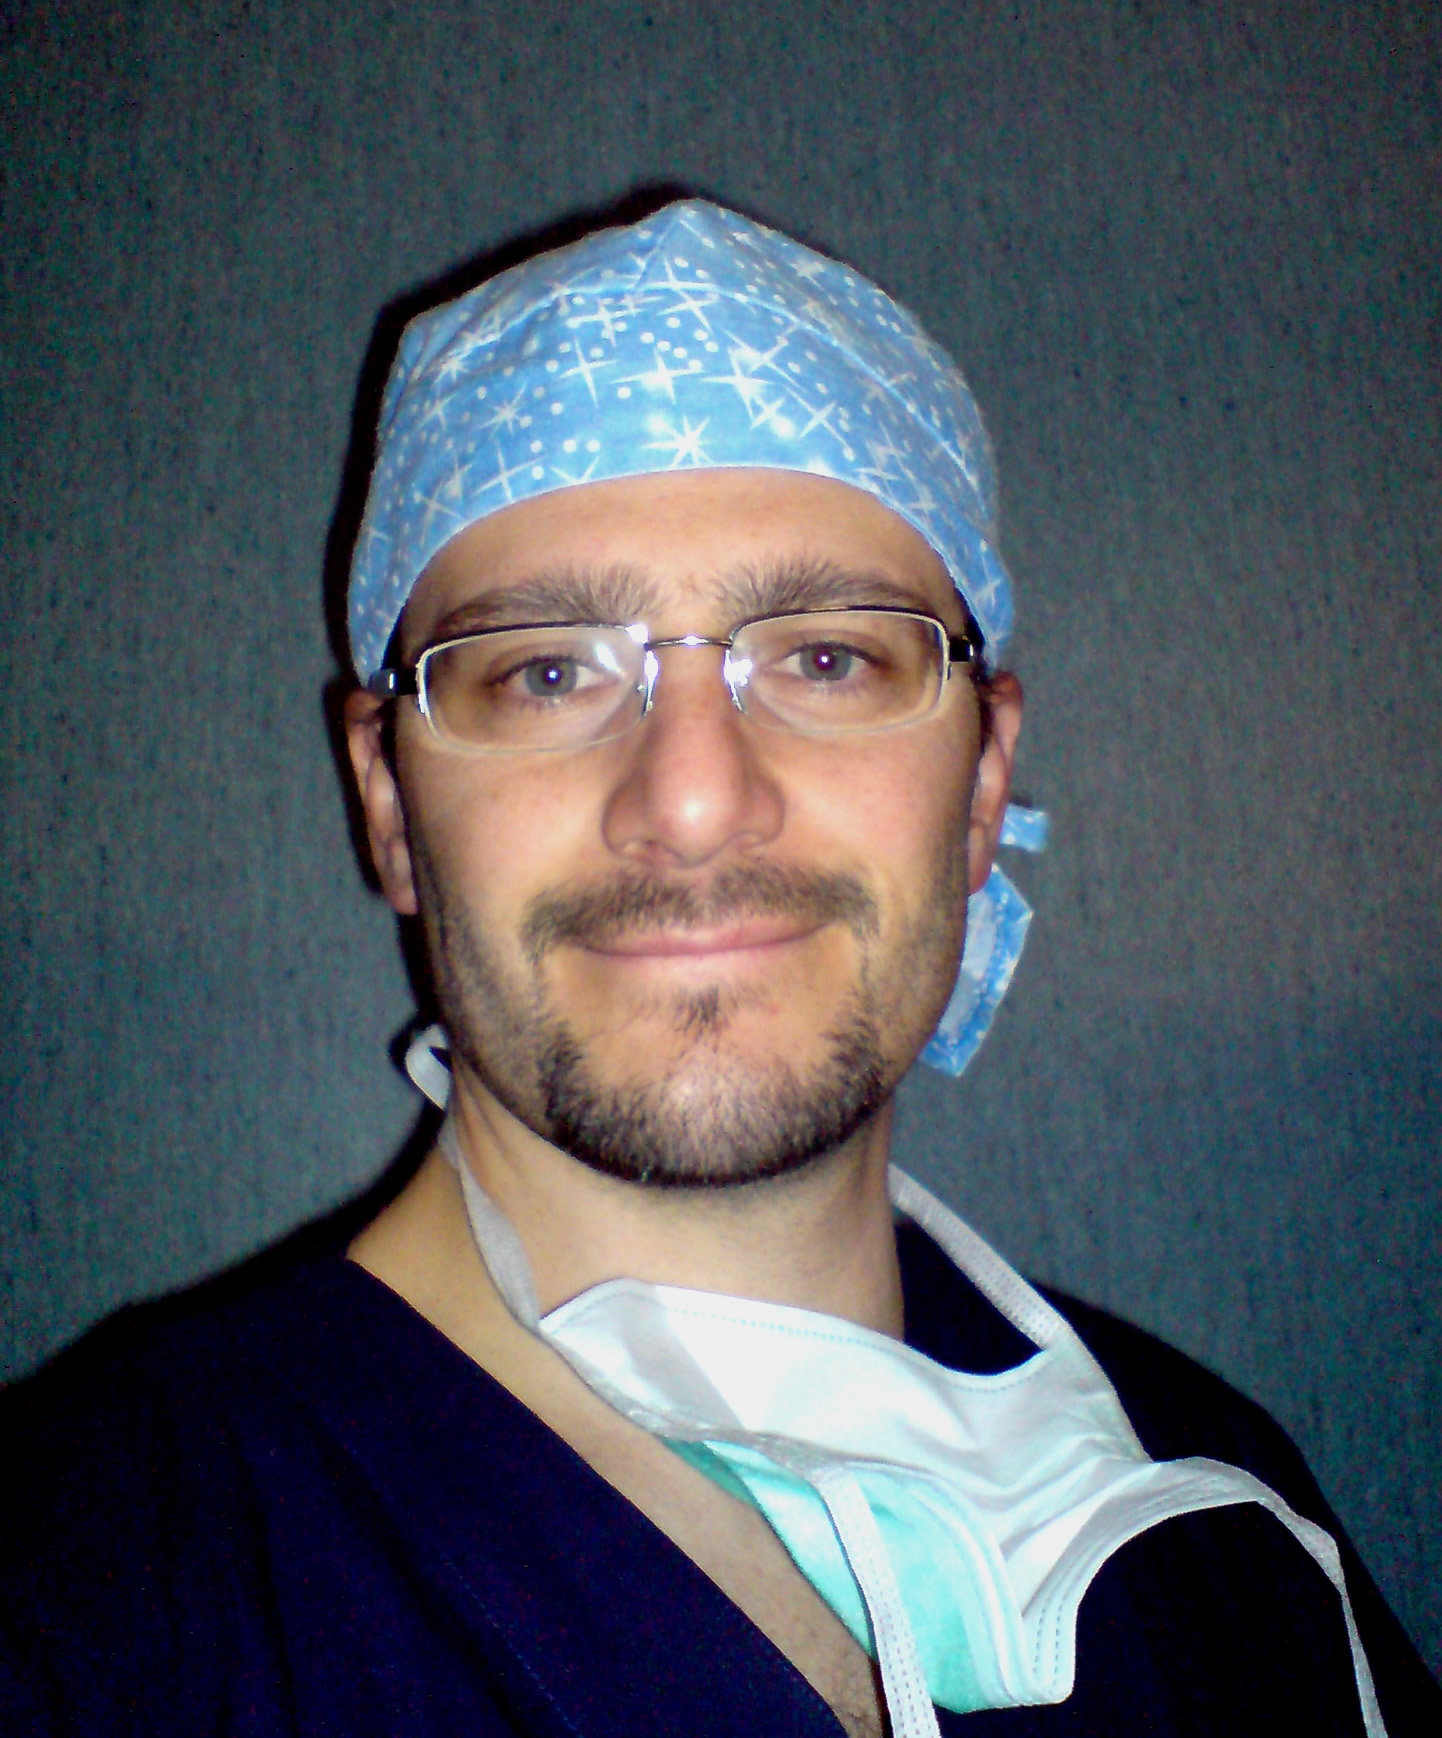 dott roberto gabrielli vascular surgeon chirurgo vascolare vascular surgeon